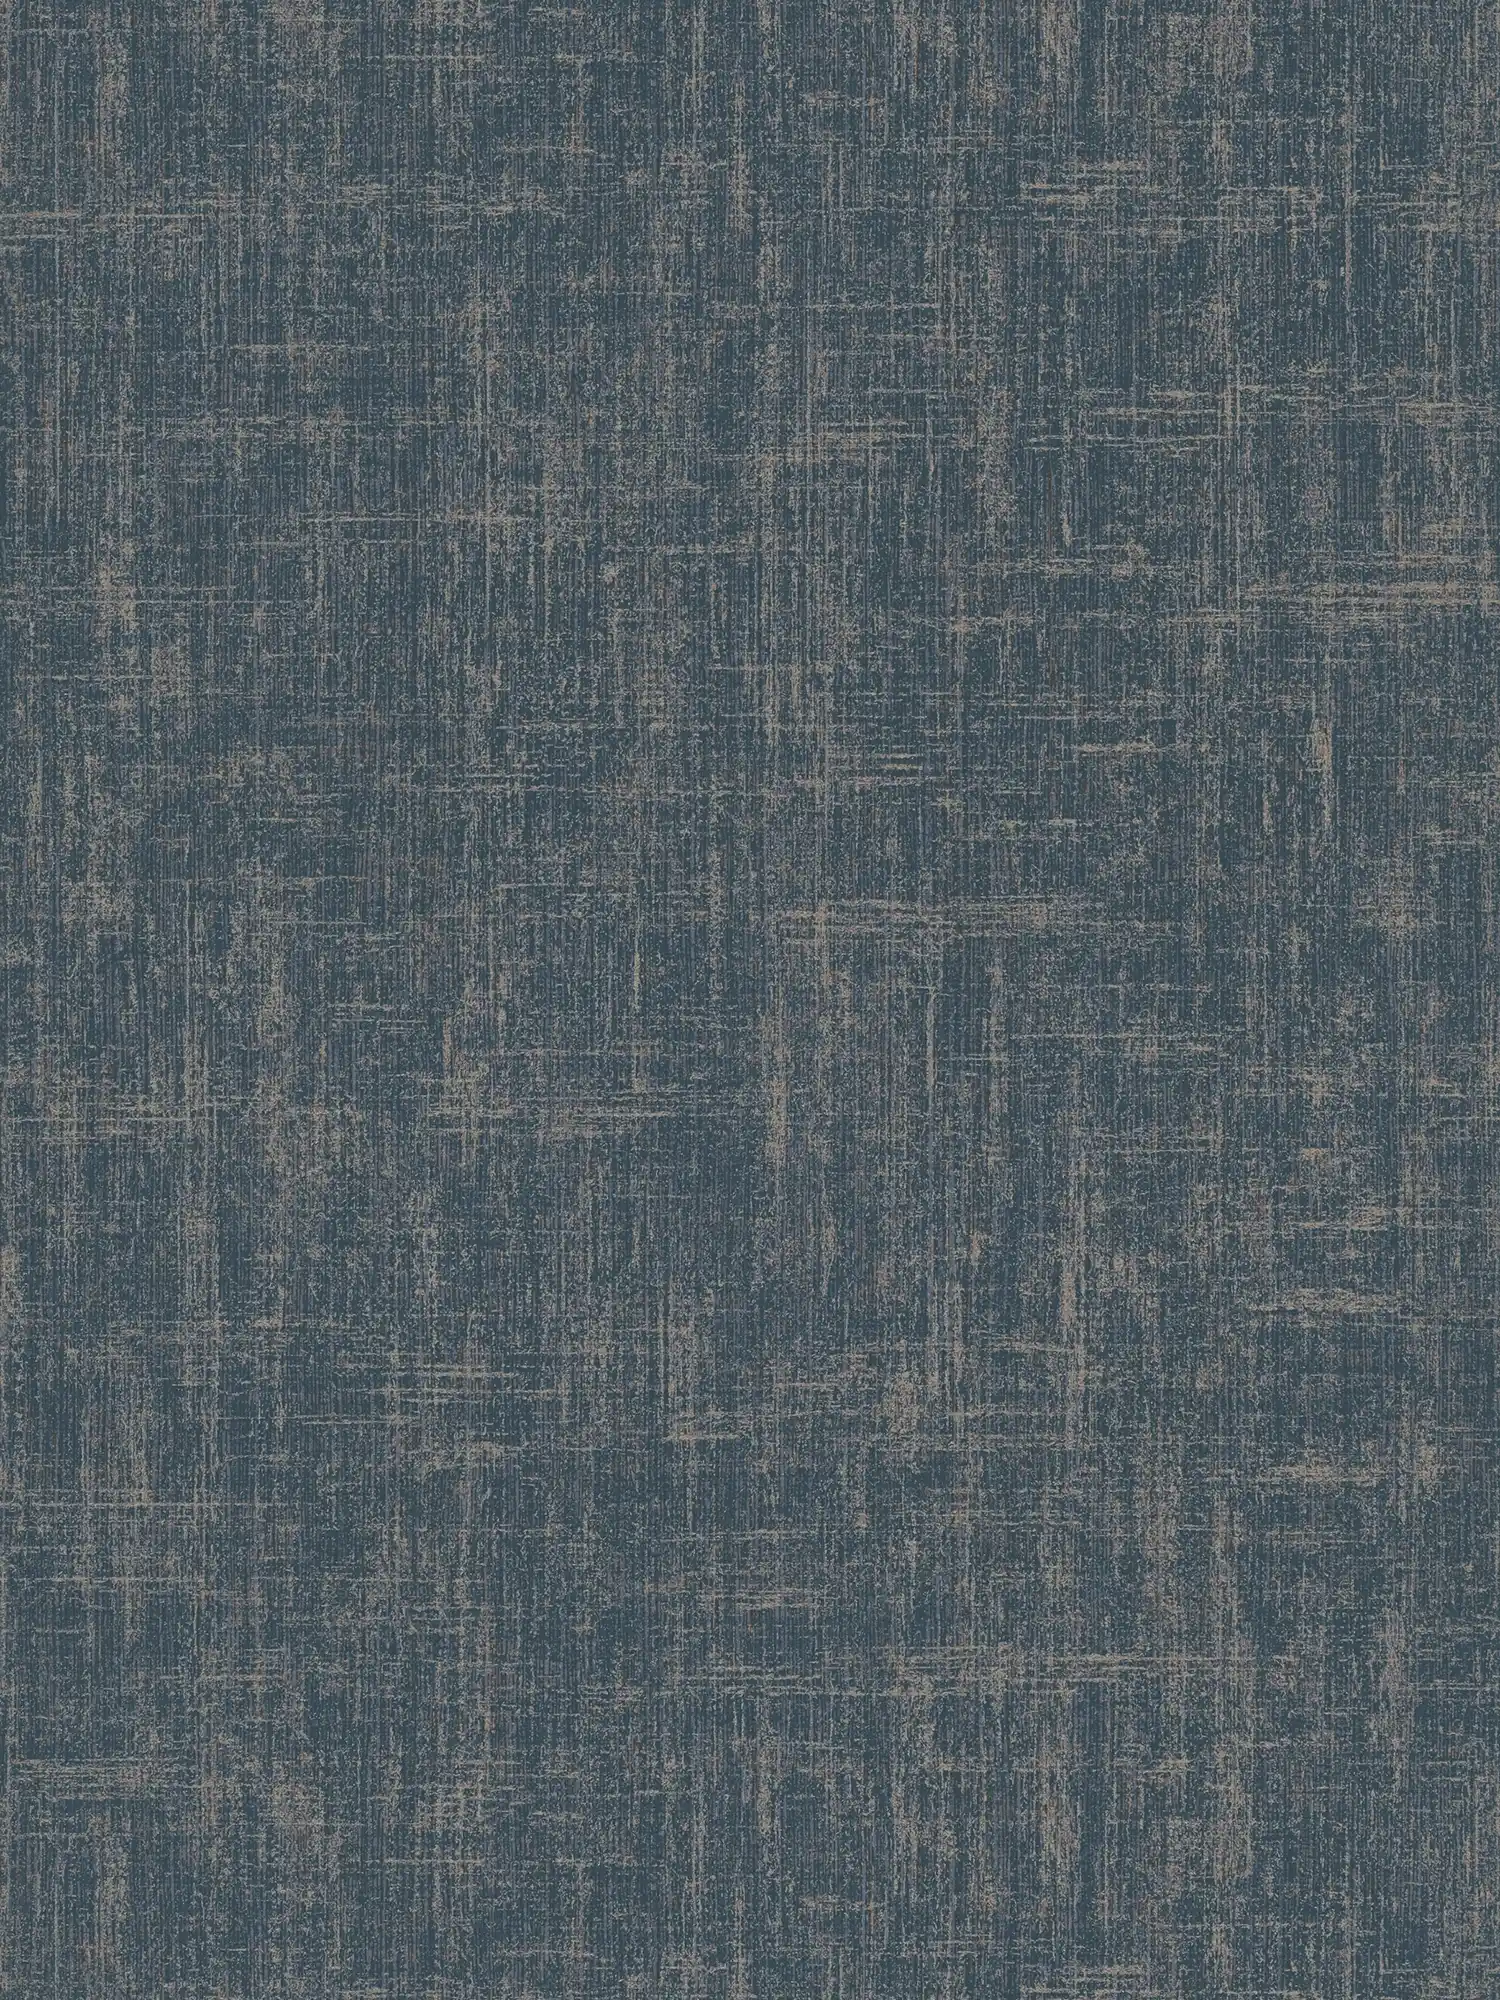 Marineblaue Tapete mit Metallic Akzent – Blau
